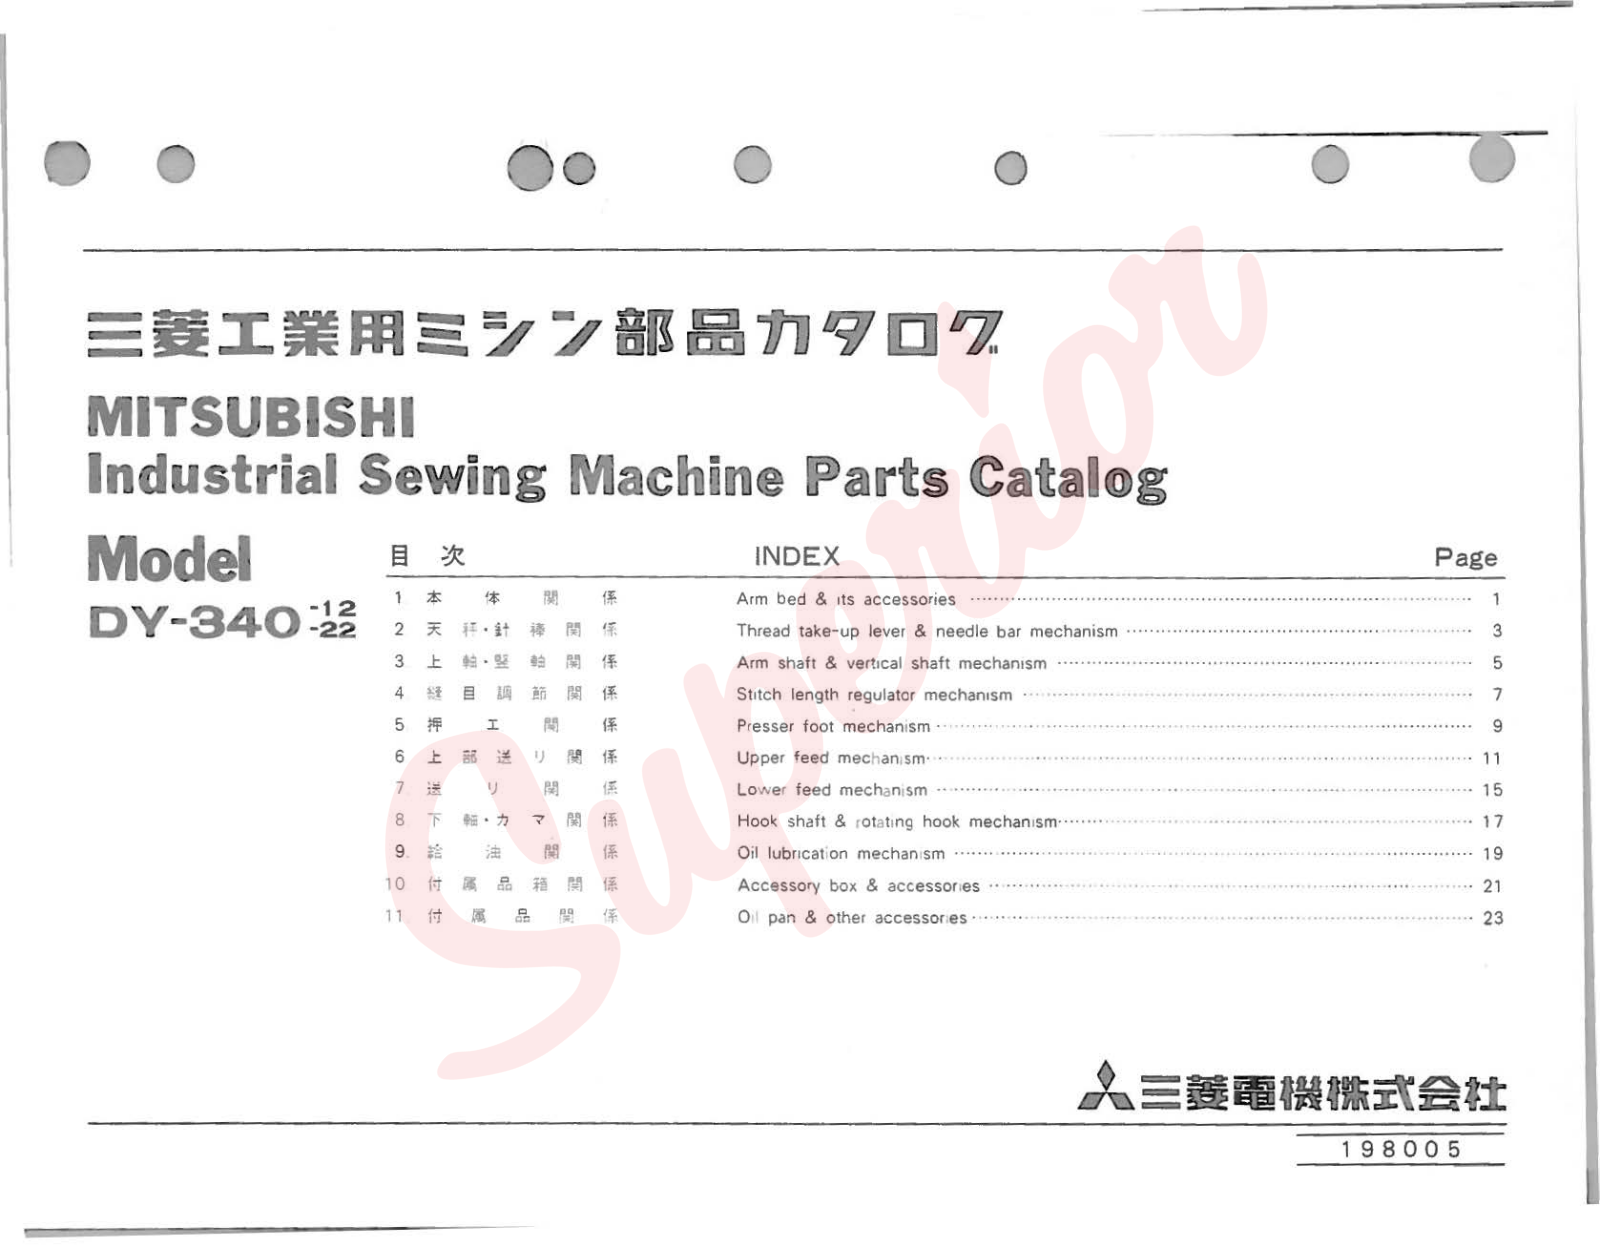 Mitsubishi DY-340-12, DY-340-22 Manual